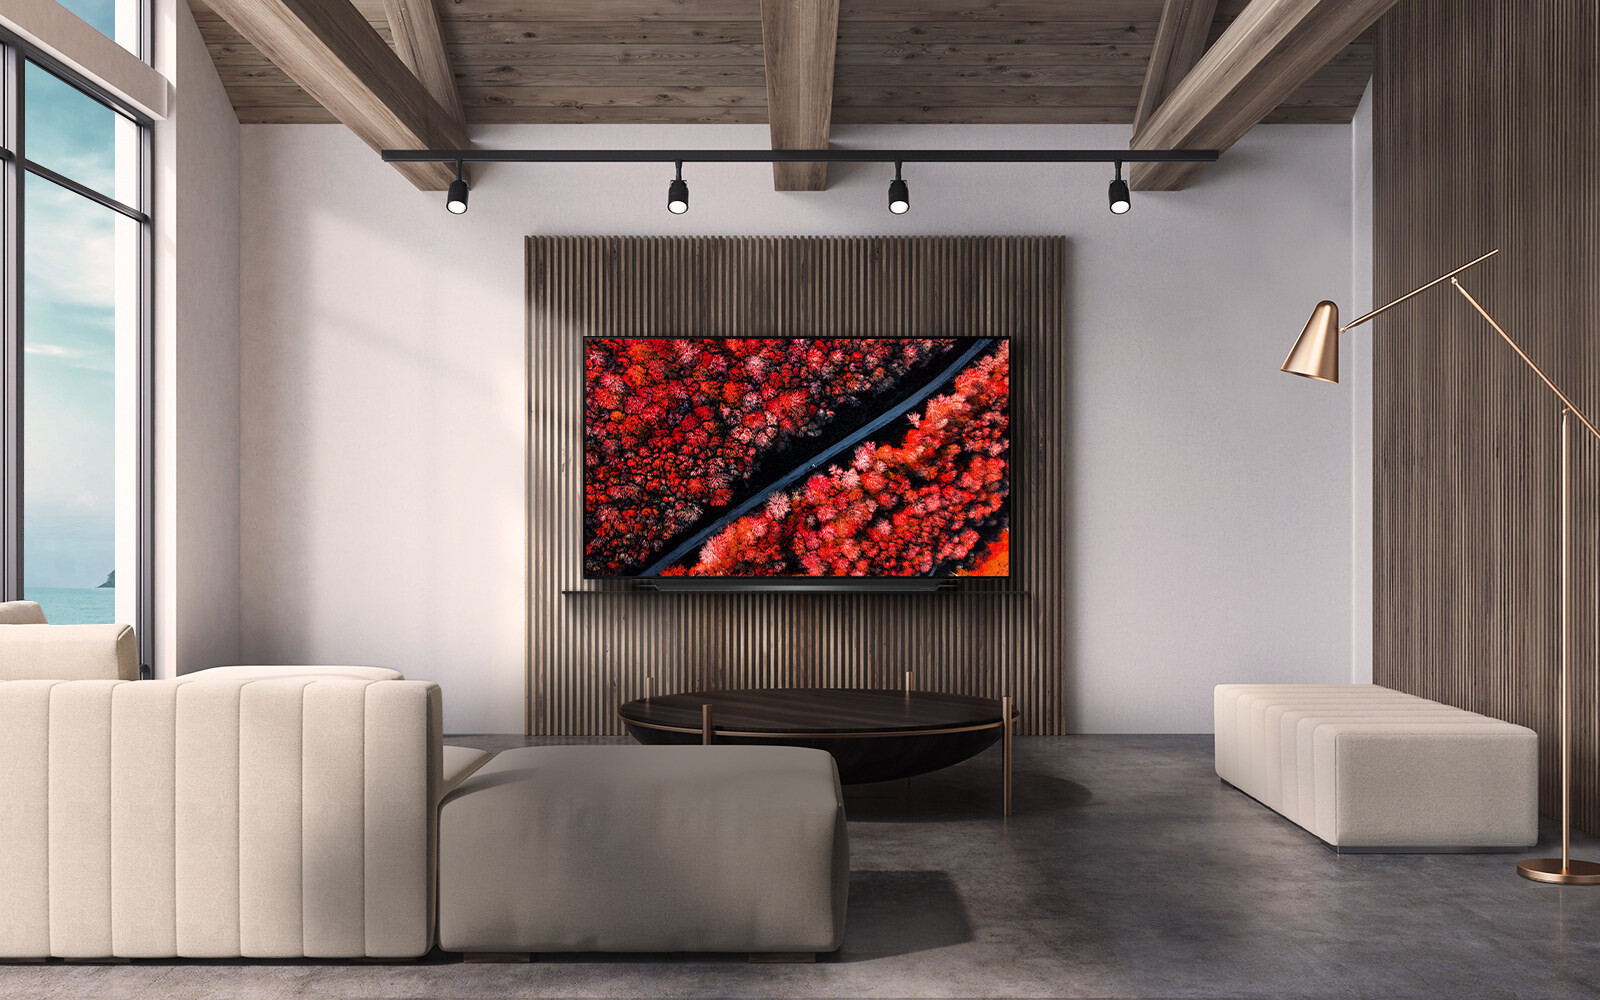 LG unveils its Black Friday sale on 2019 OLED TVs - www.bagsaleusa.com News